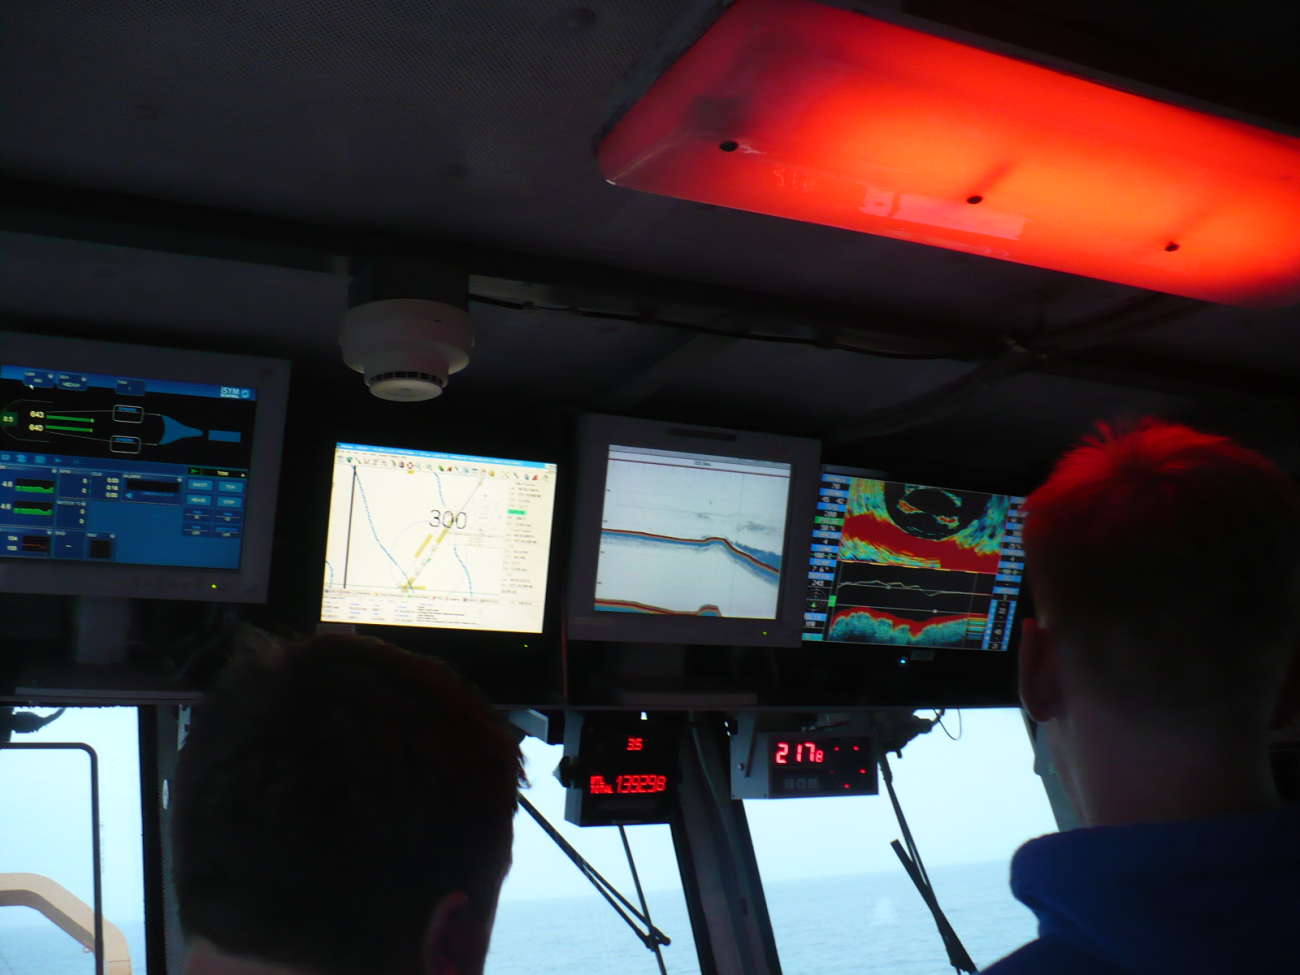 Bridge computer displays to allow bridge watch to monitor trawling operations,maintain depth awareness, etc